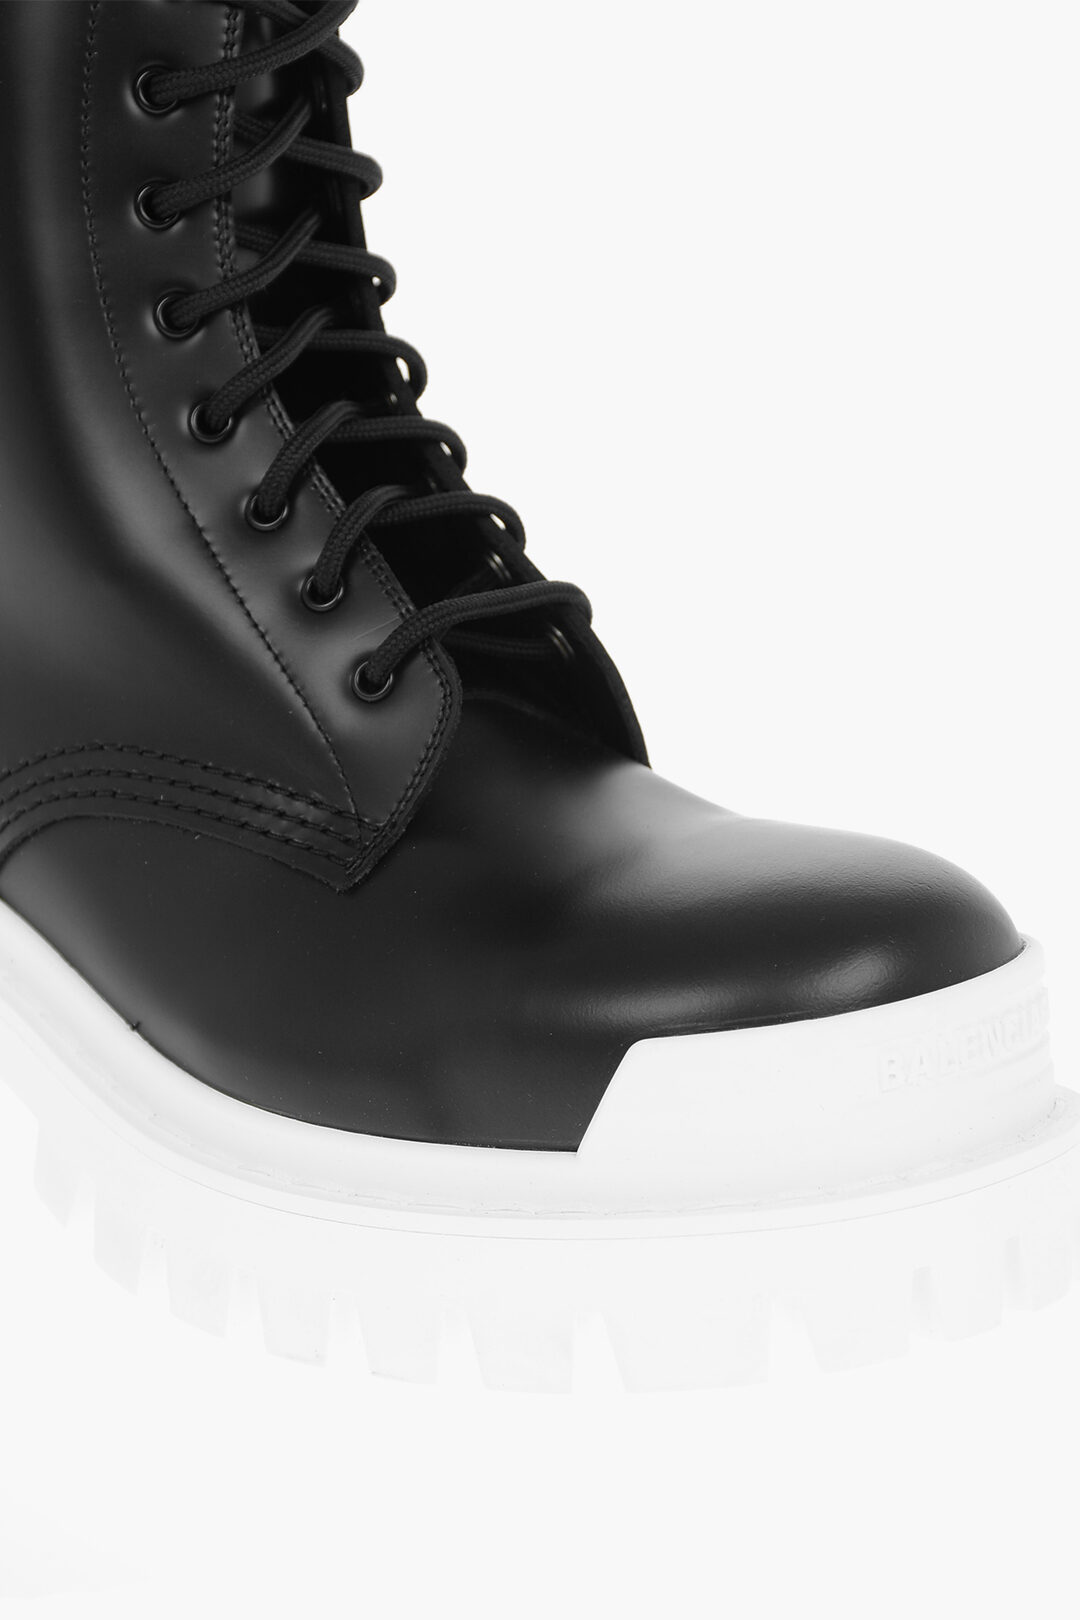 Rede gullig købmand Balenciaga Leather STRIKE Combat Boots With Platform Sole women - Glamood  Outlet